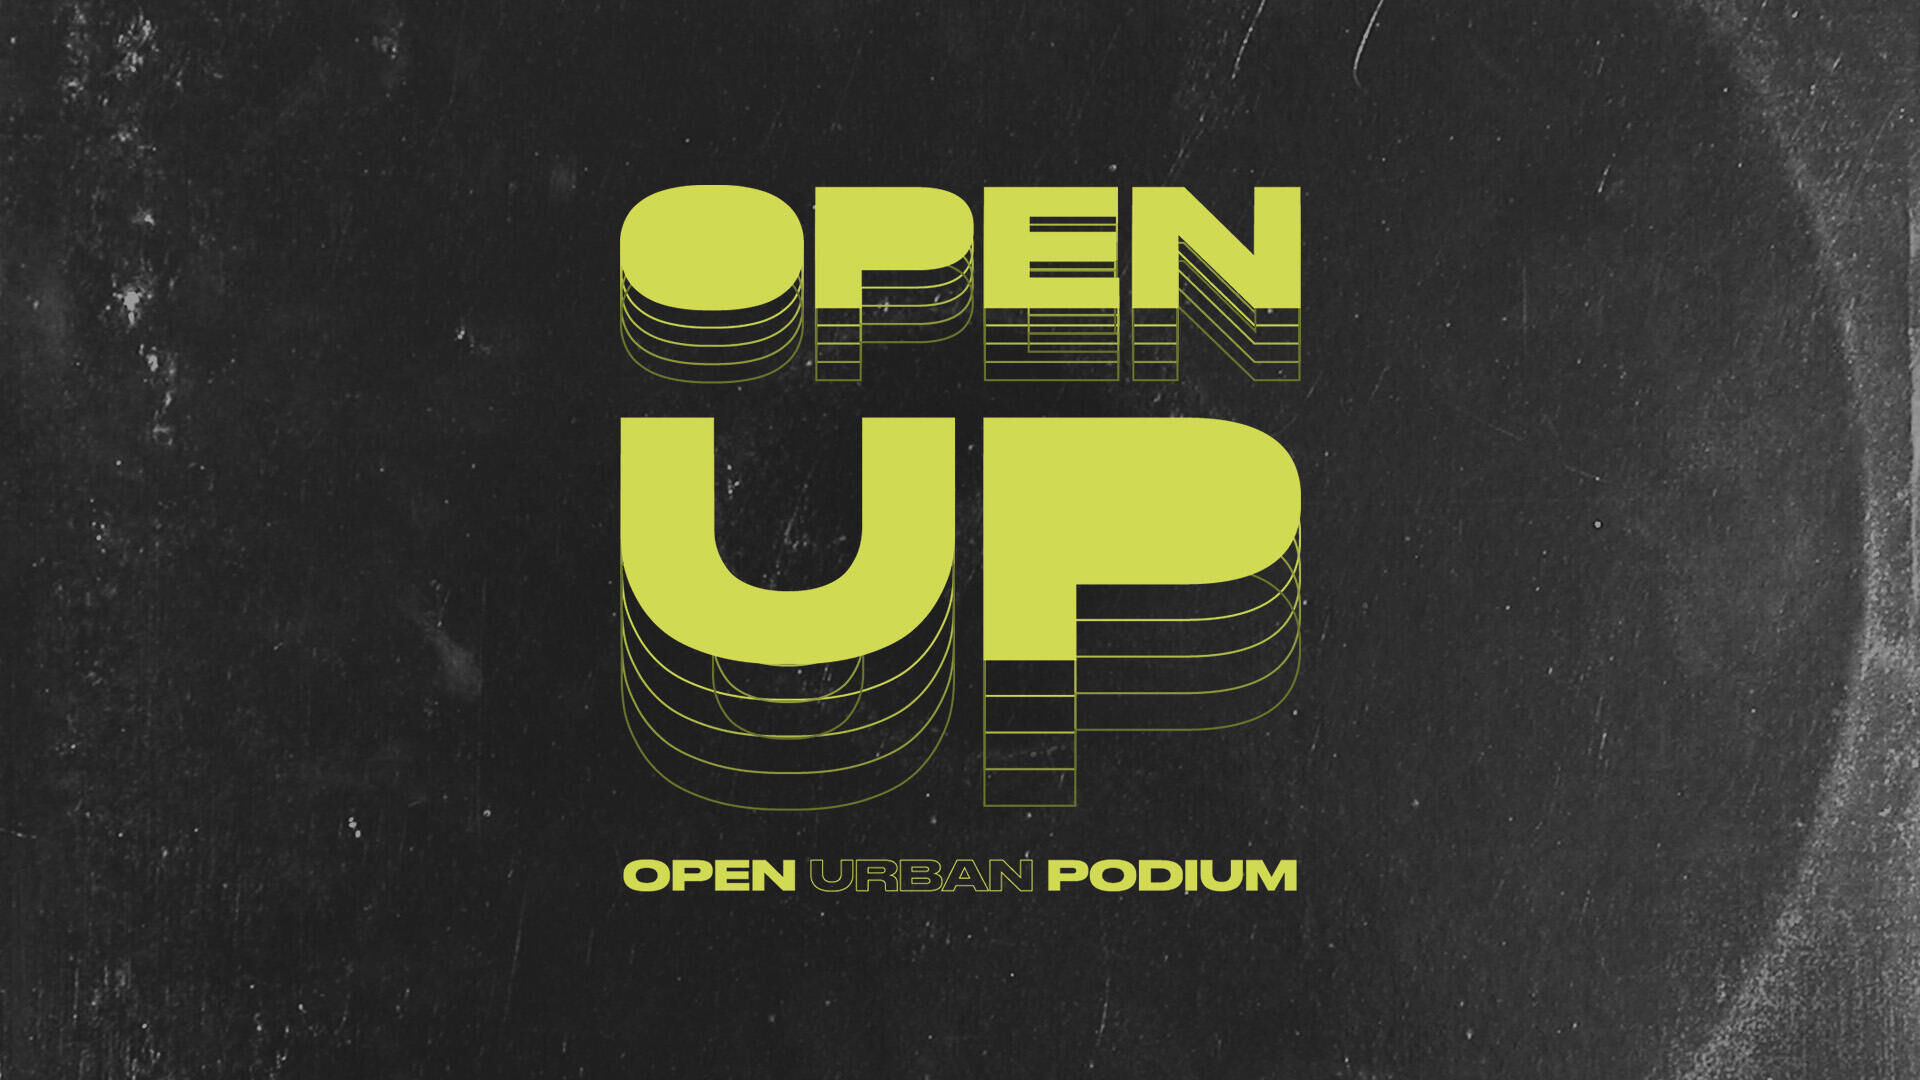 Open Up! Urban Open Podium